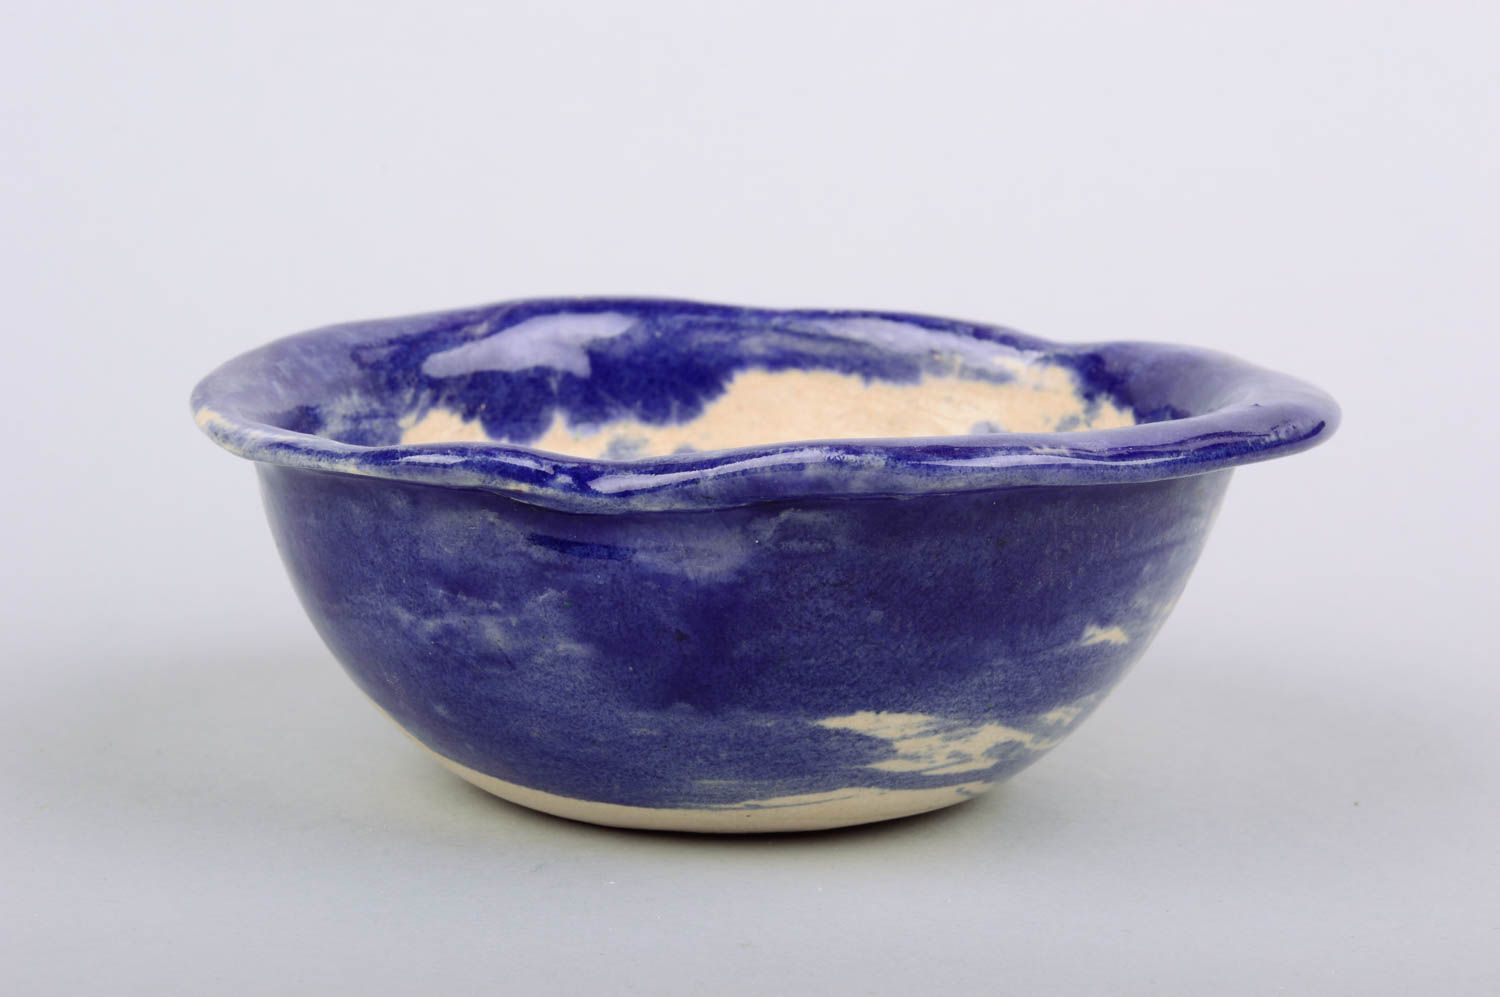 Small blue ceramic plate cute unusual pottery stylish handmade kitchenware photo 1